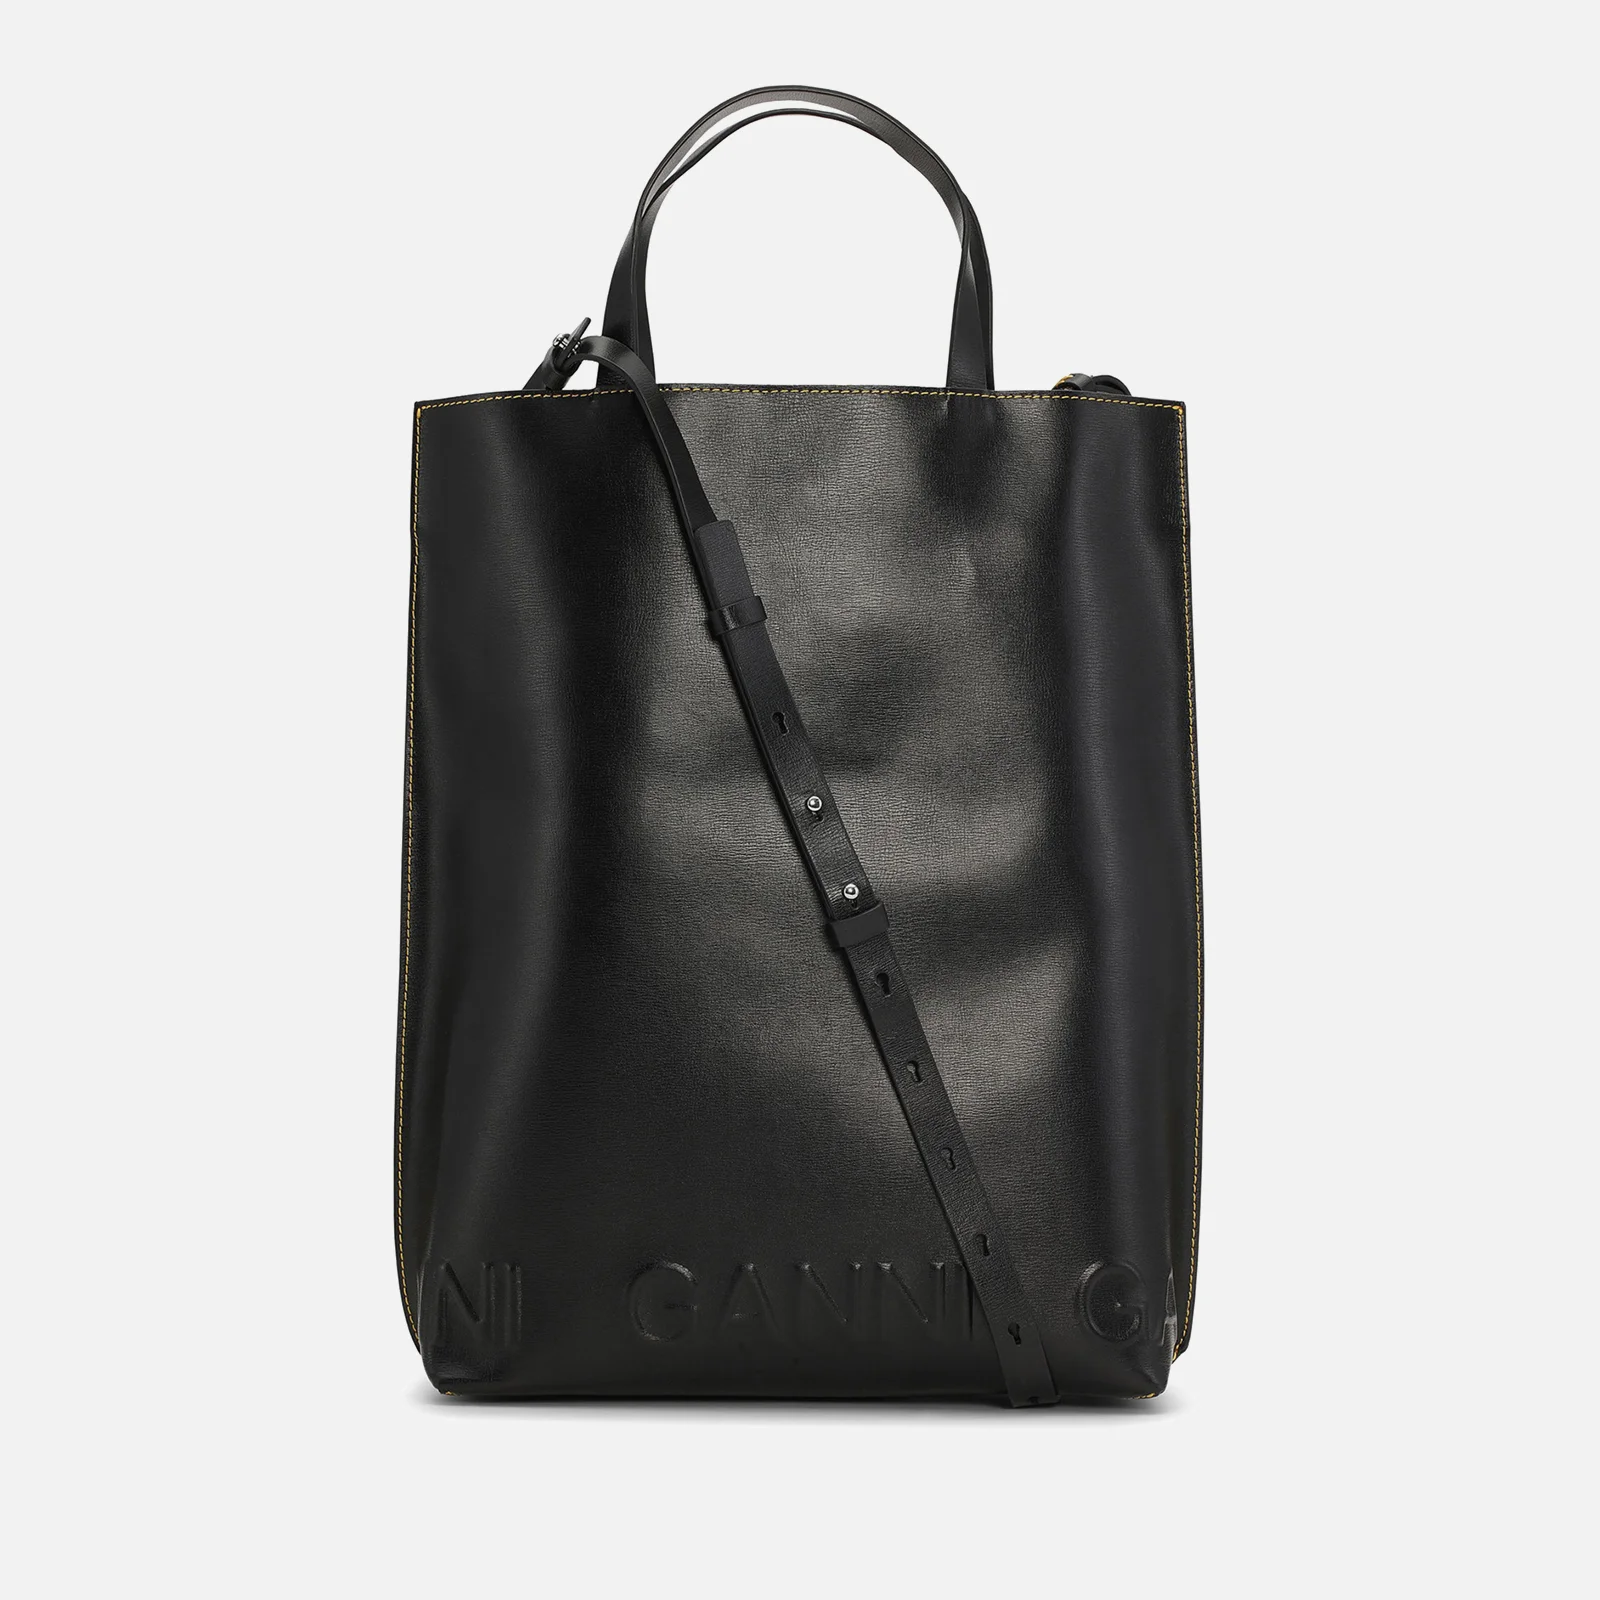 Ganni Medium Banner Logo Leather Tote Bag Image 1